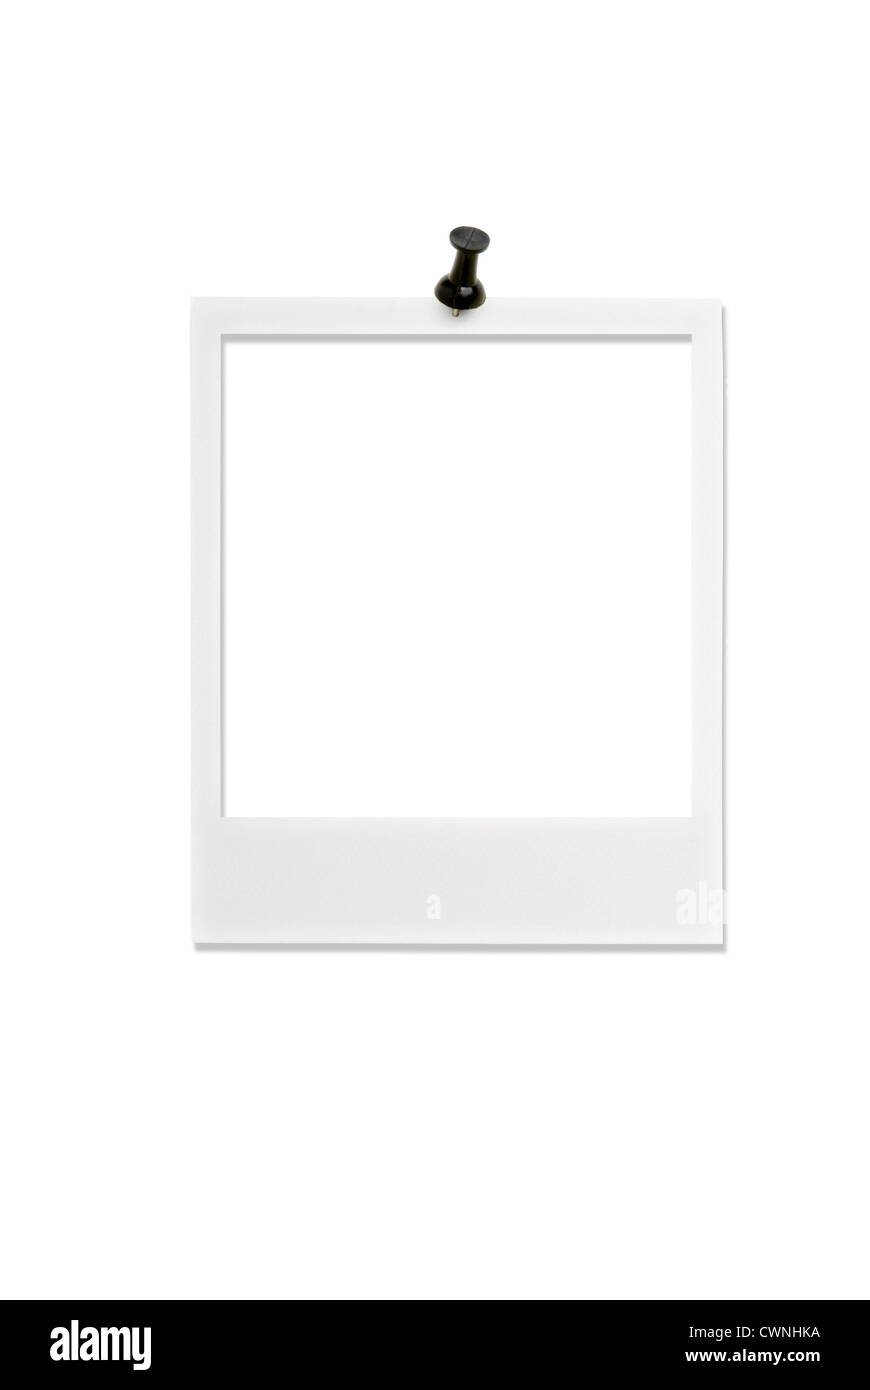 Polaroid frame, with pin, isolated on 100% white background Stock Photo